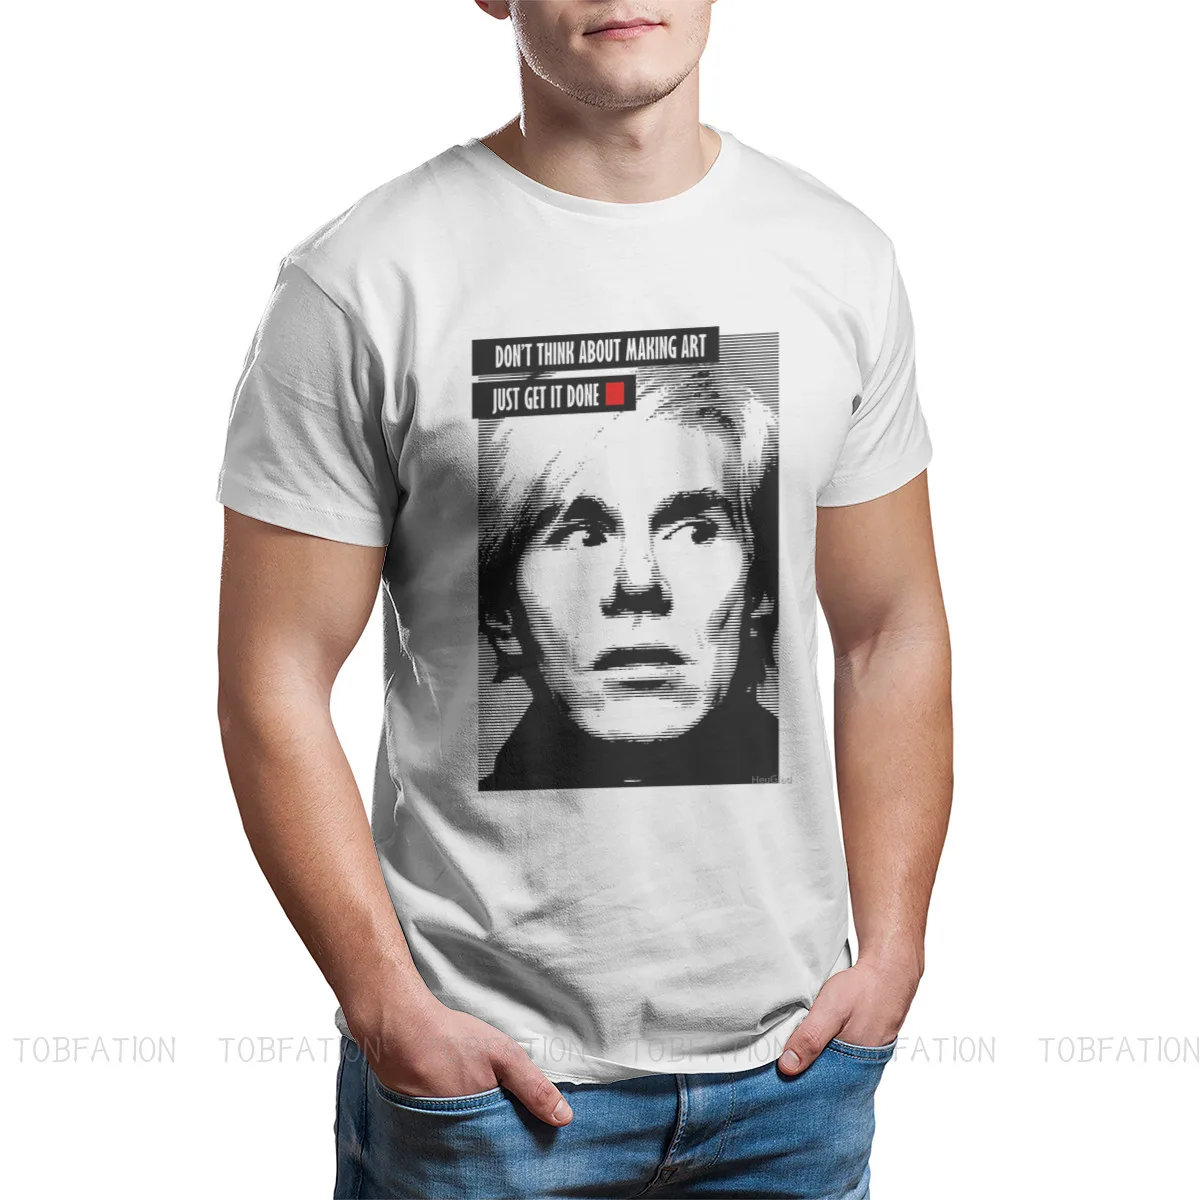 

Cool Man's TShirt Andy Warhol Visual Pop Art Artist Crewneck Tops 100% Cotton T Shirt Humor High Quality Gift Idea